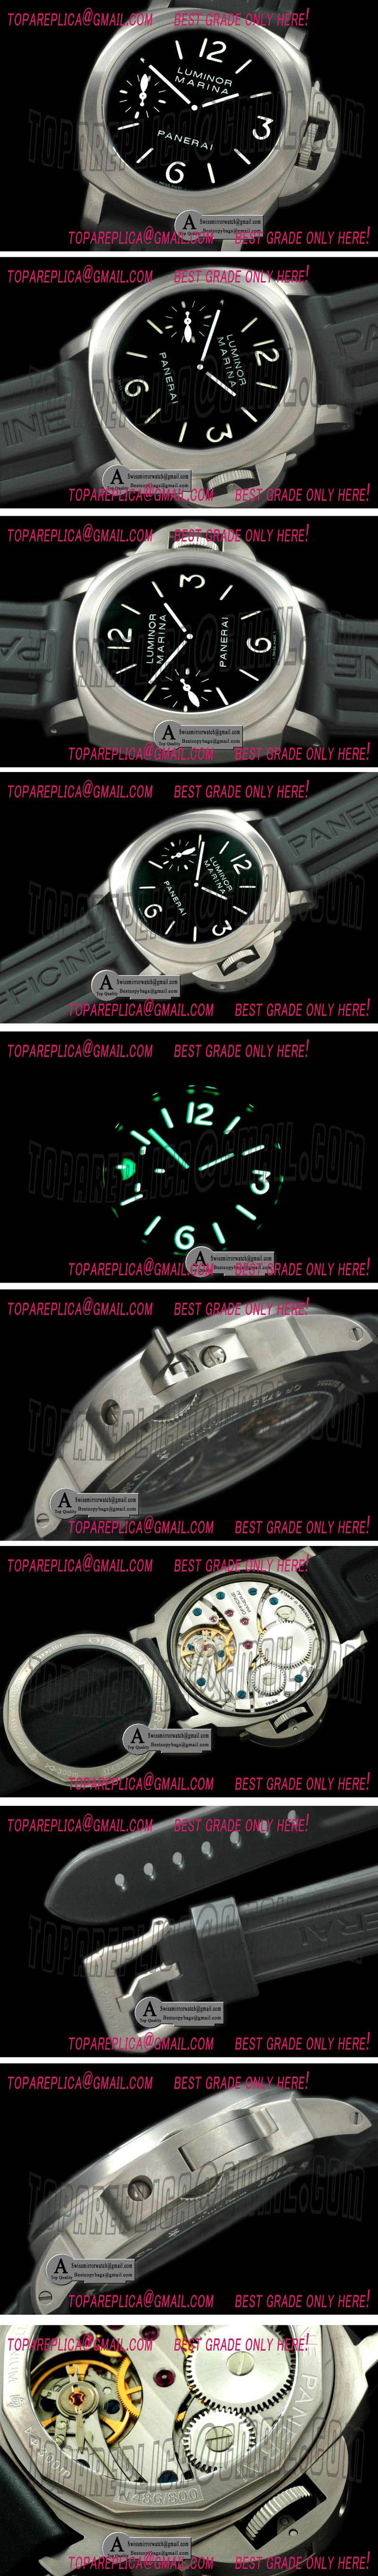 Panerai Pam 177 N Titanium/Rubber Black Asia 6497 21600bph Replica Watches